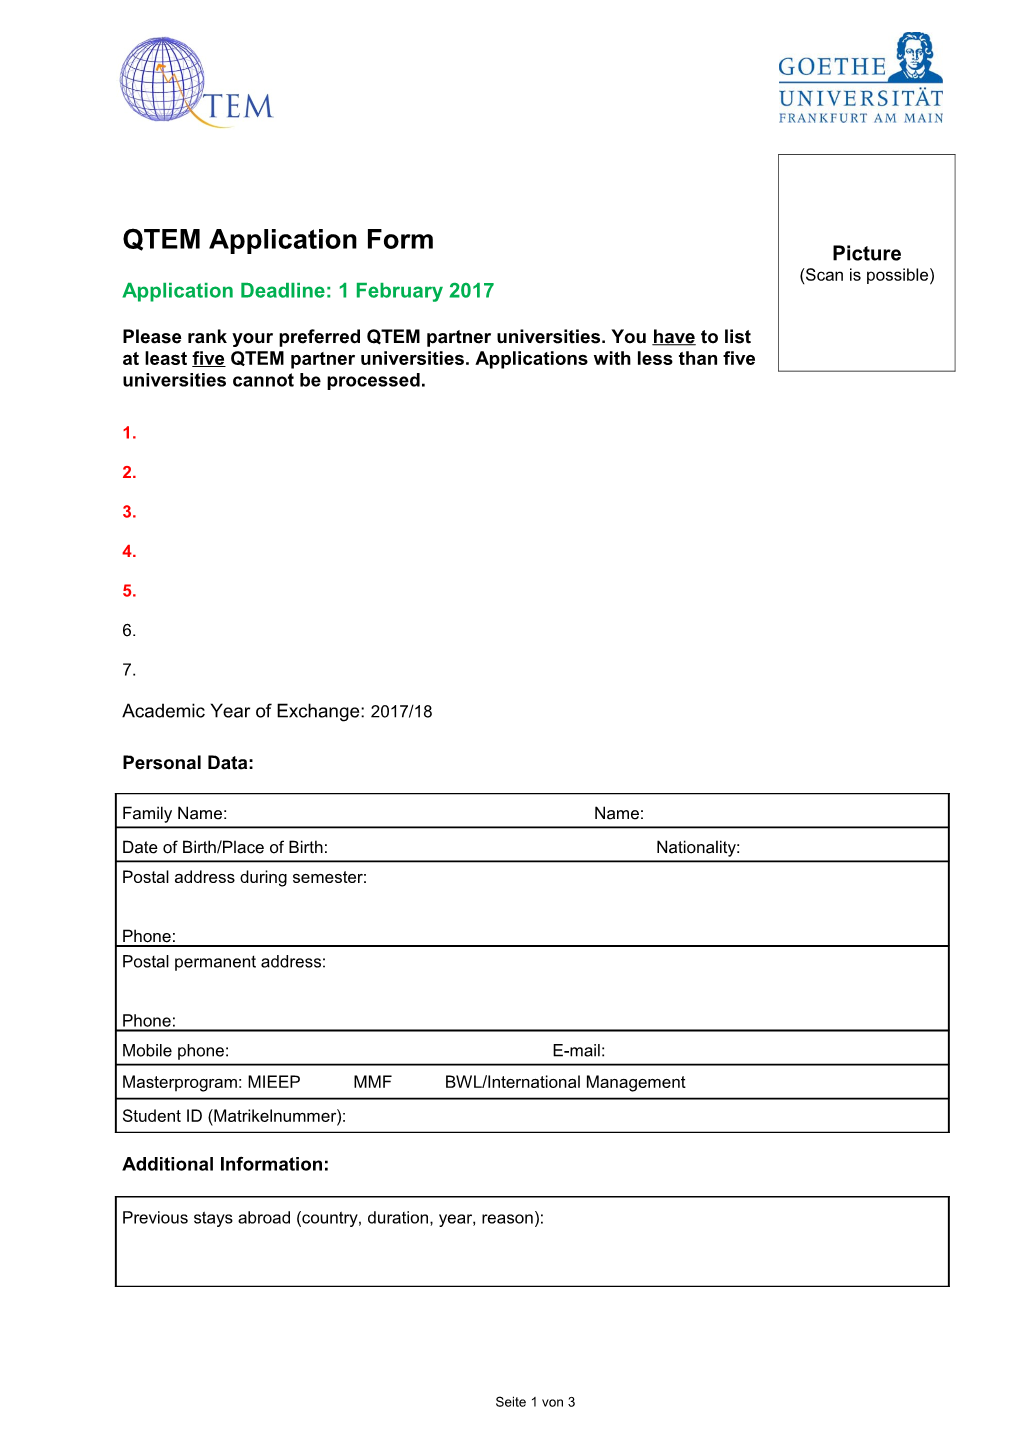 QTEM Application Form s1